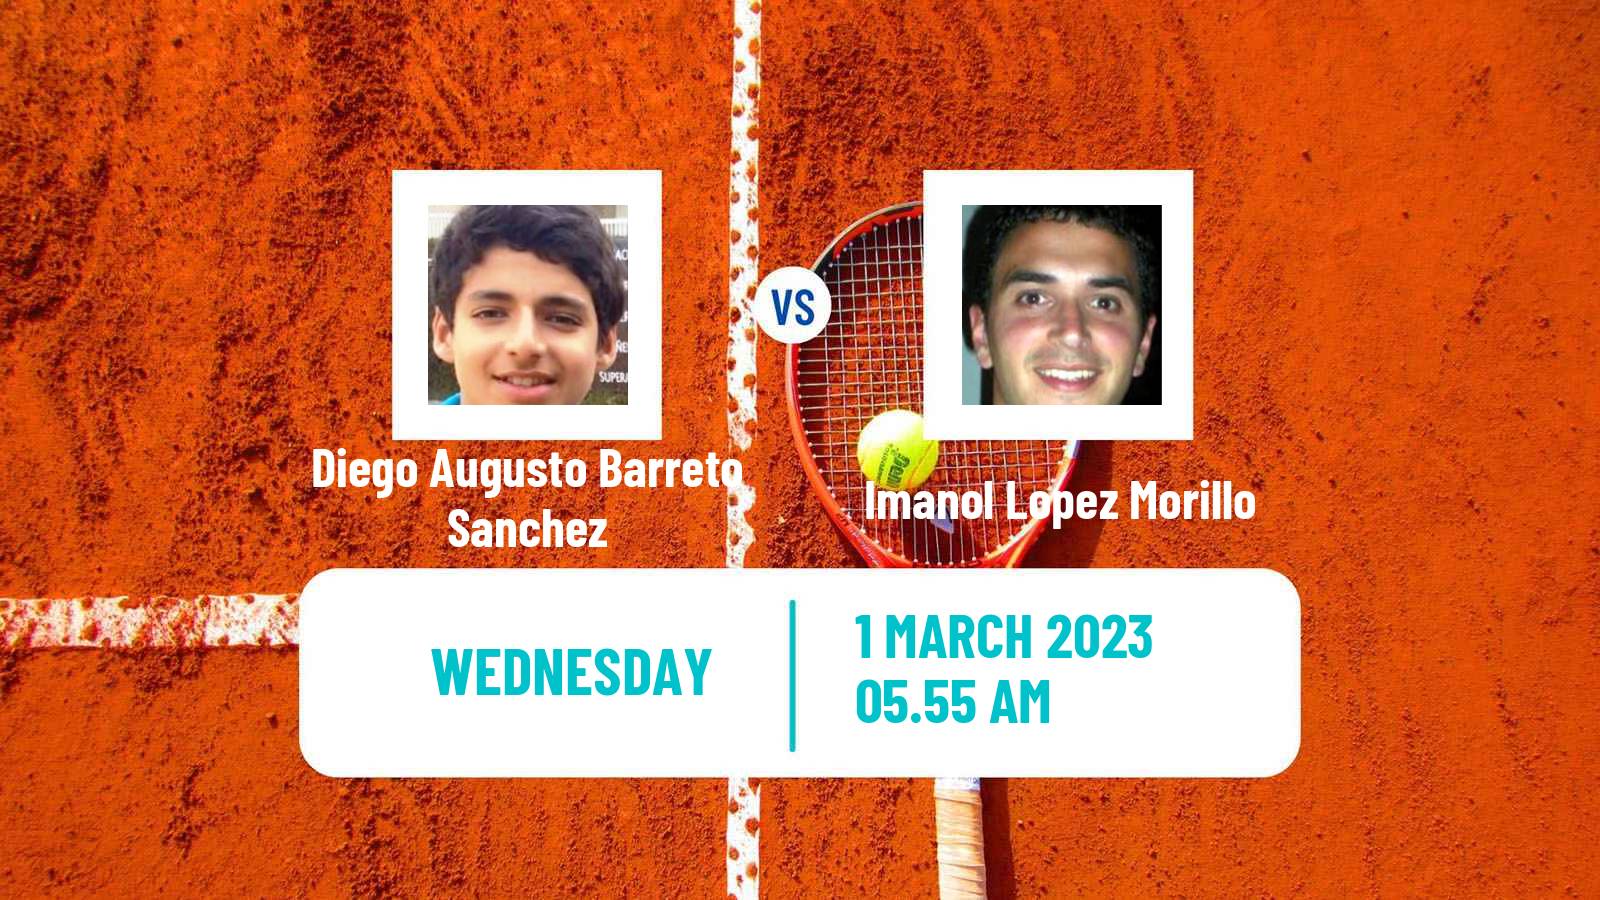 Tennis ITF Tournaments Diego Augusto Barreto Sanchez - Imanol Lopez Morillo